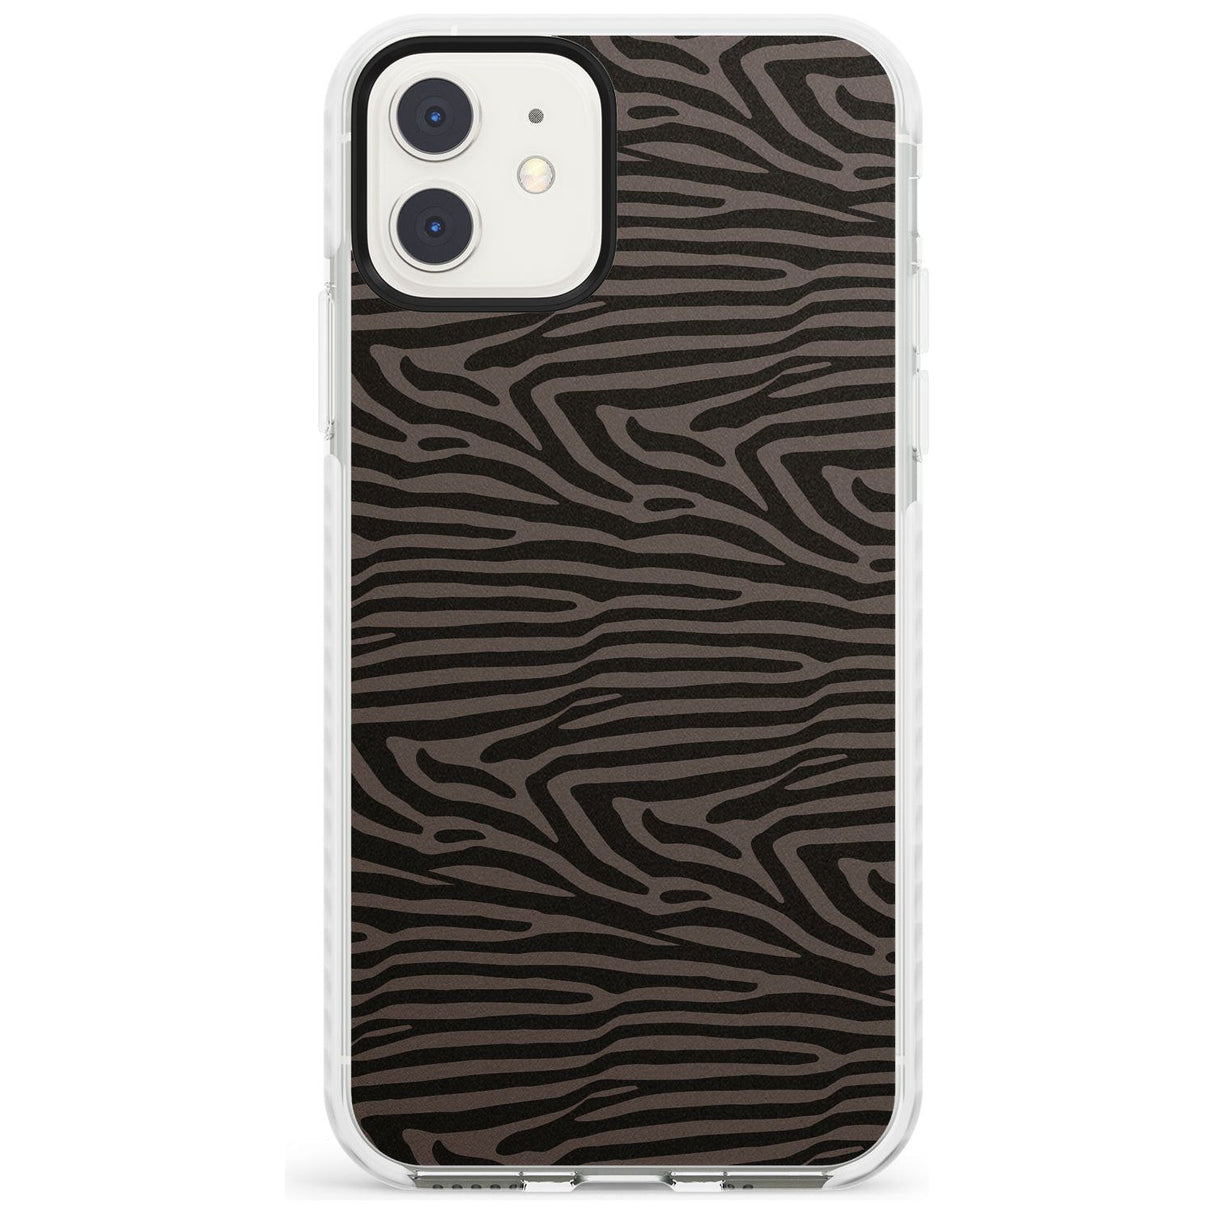 Dark Animal Print Pattern Zebra Impact Phone Case for iPhone 11